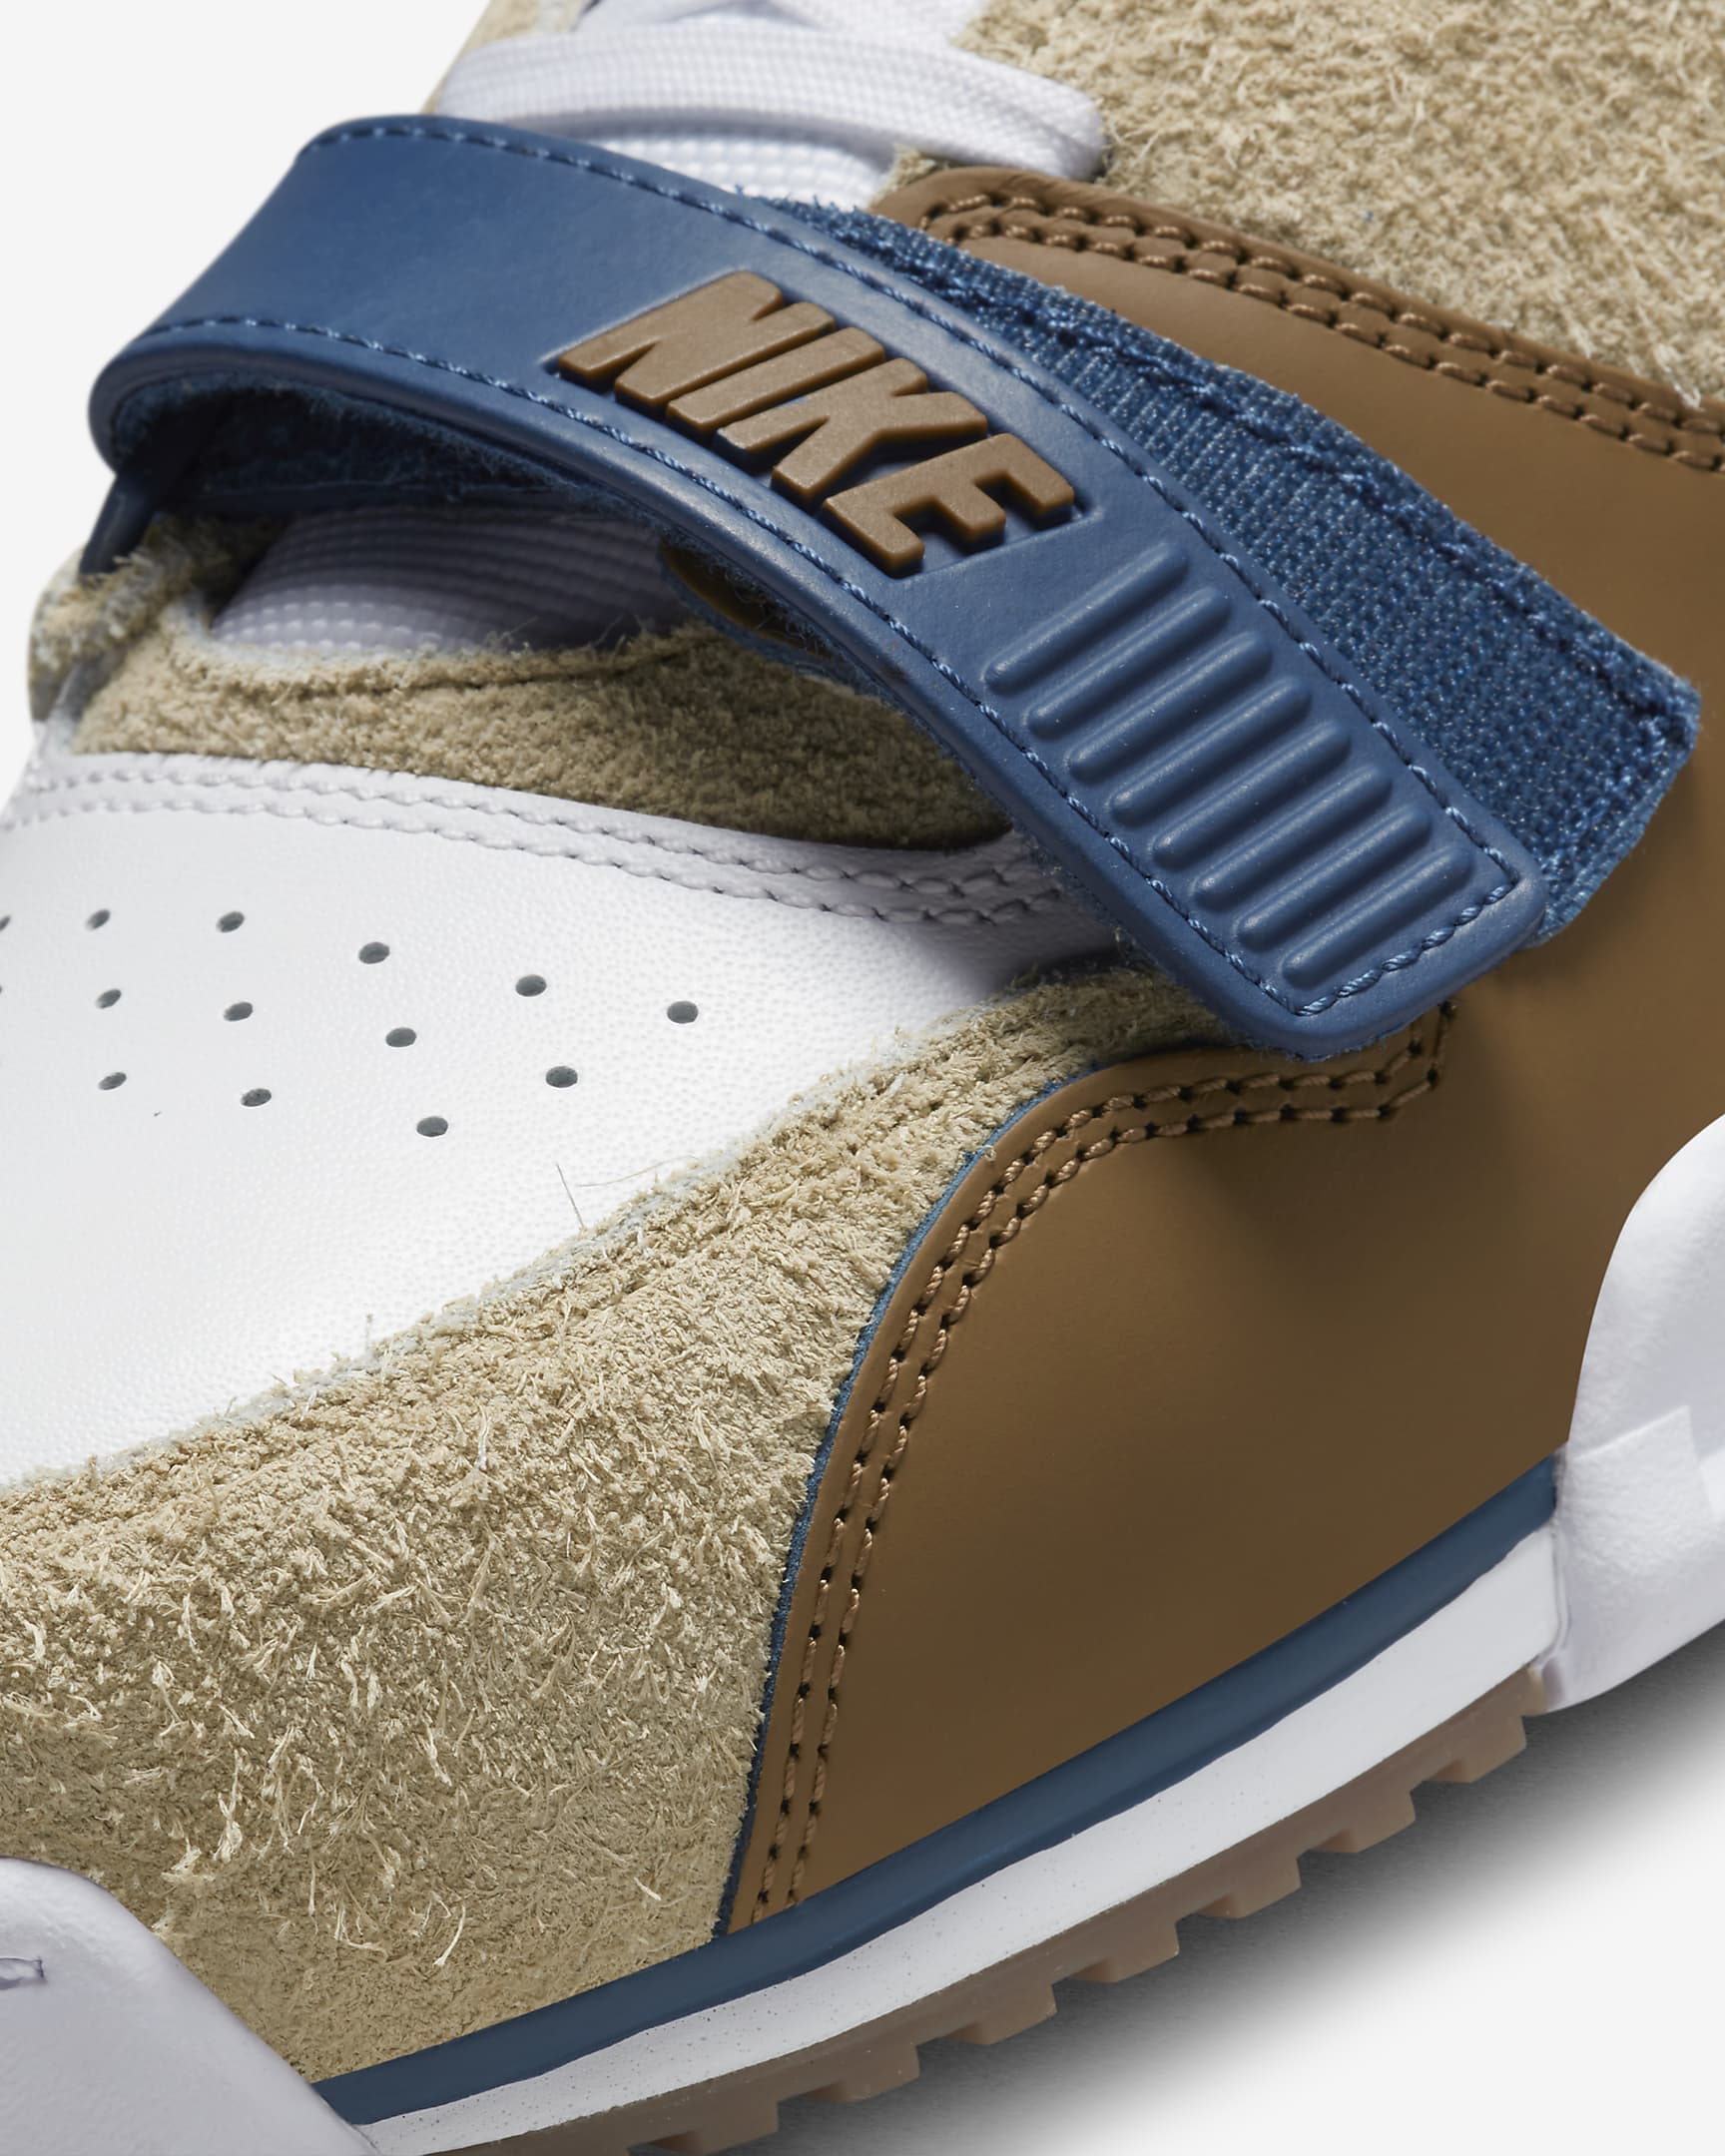 Nike Air Trainer 1 Men's Shoes - Limestone/Ale Brown/White/Valerian Blue